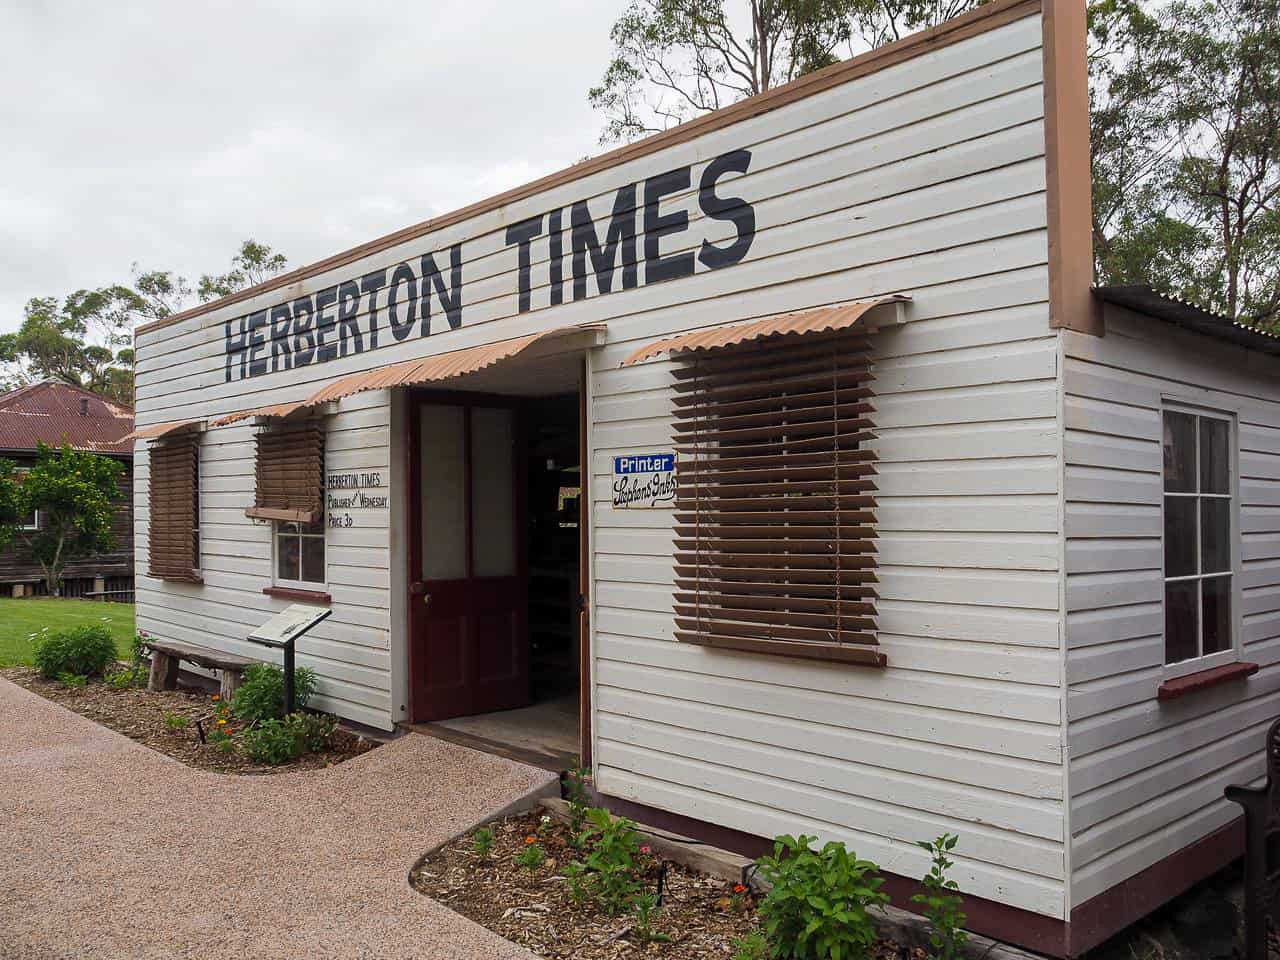 Herberton Times at Herberton Heritage Village museum, North Queensland // TravelMermaid.com